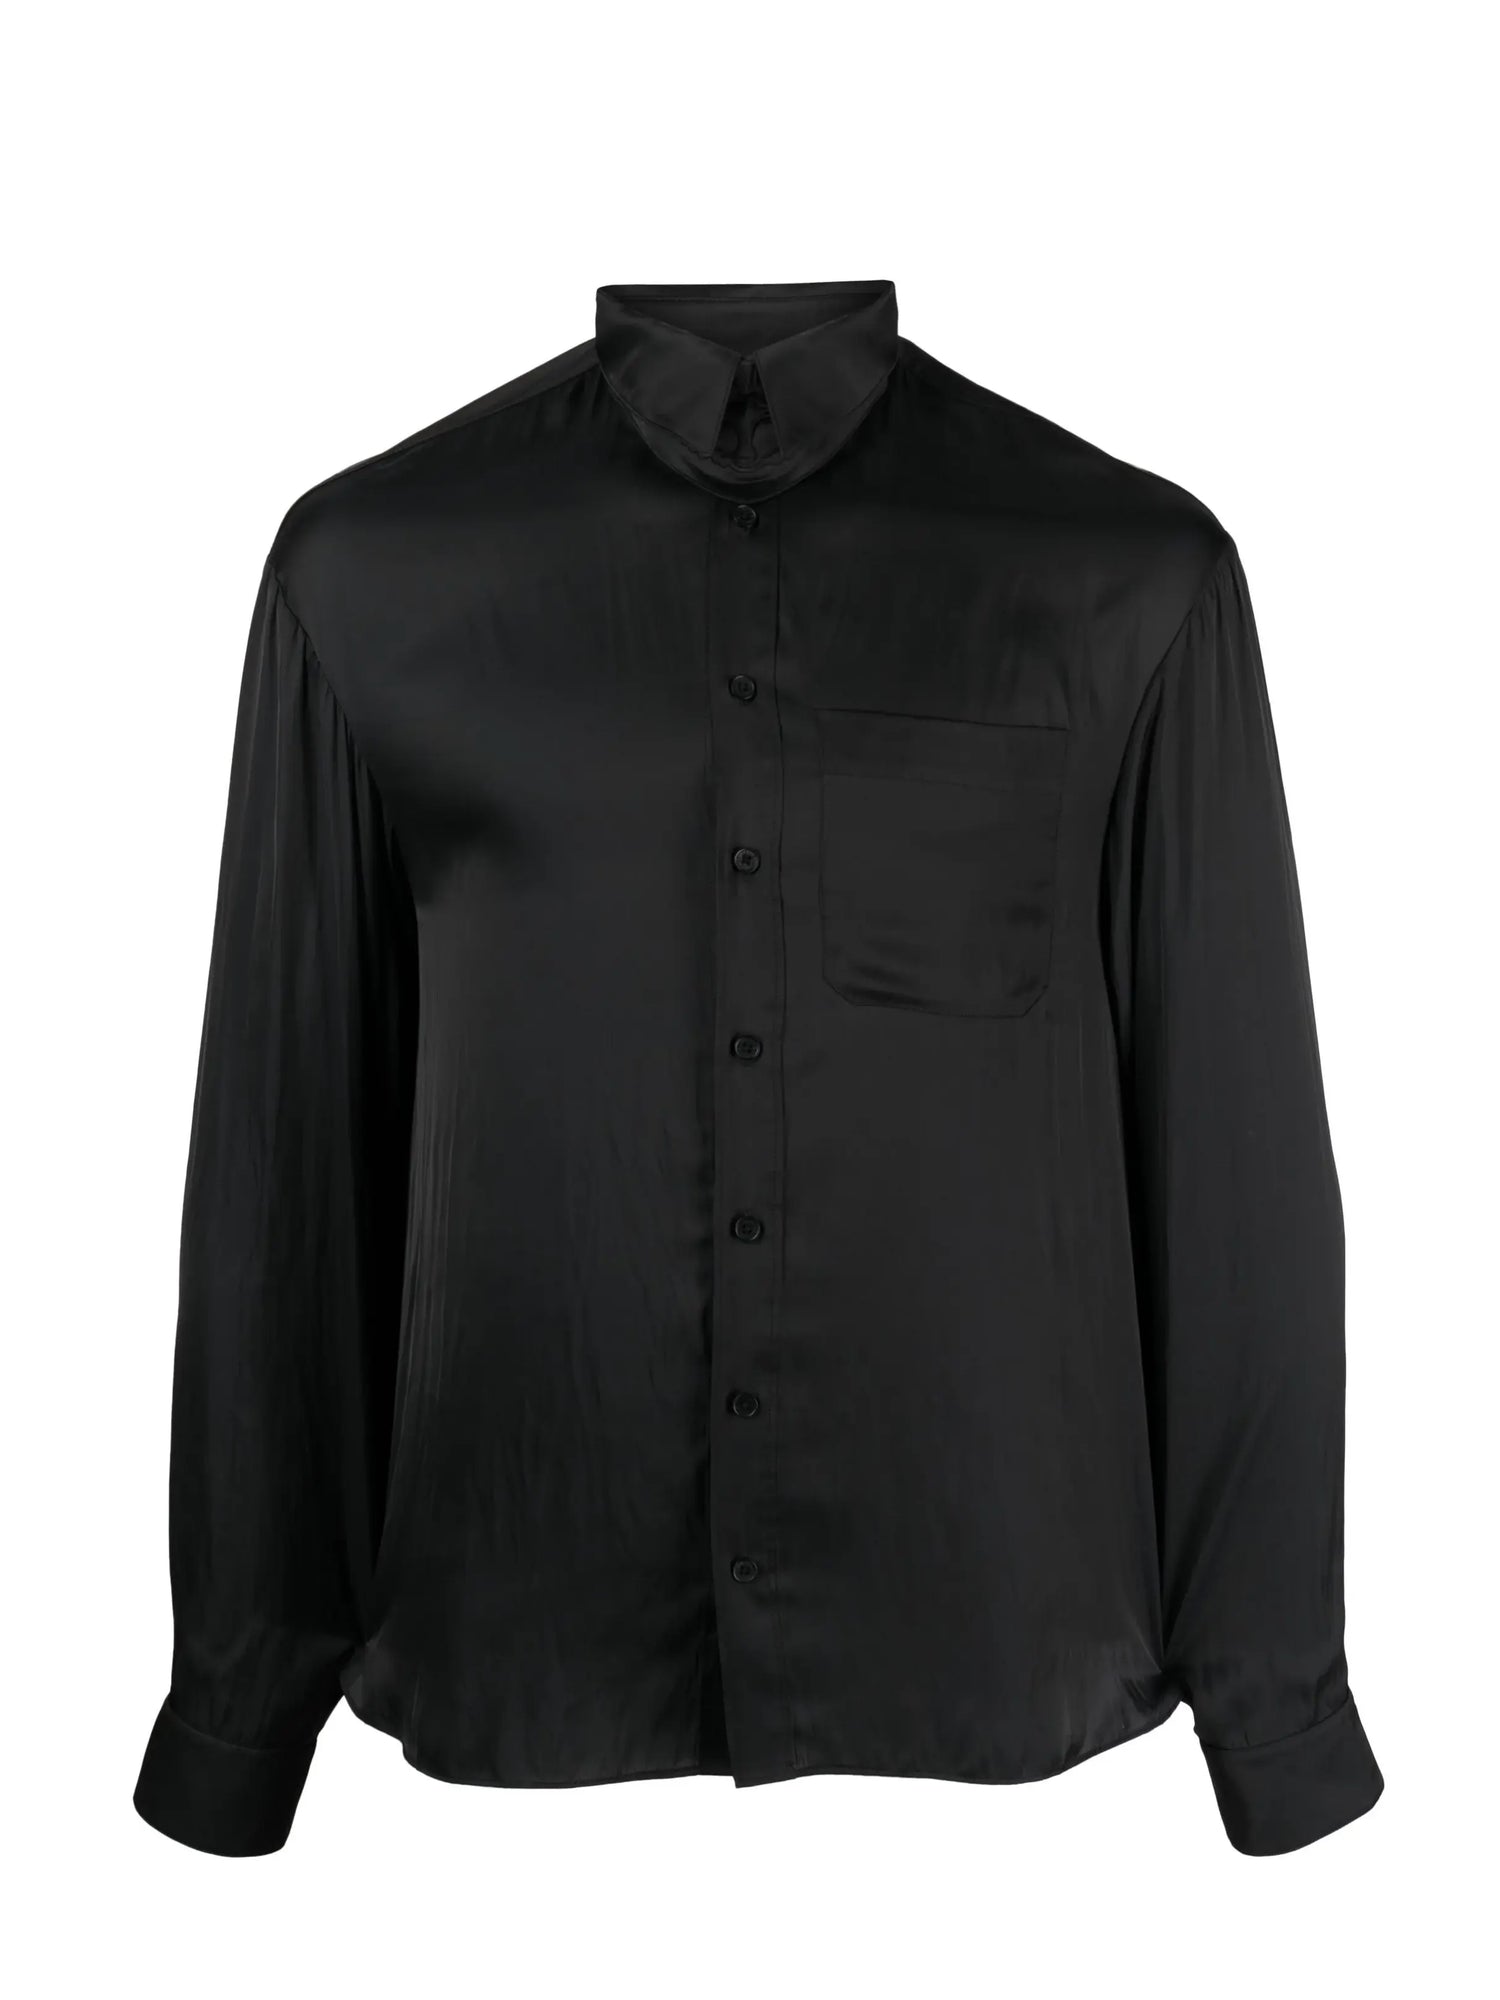 TYRONE SATIN shirt, black